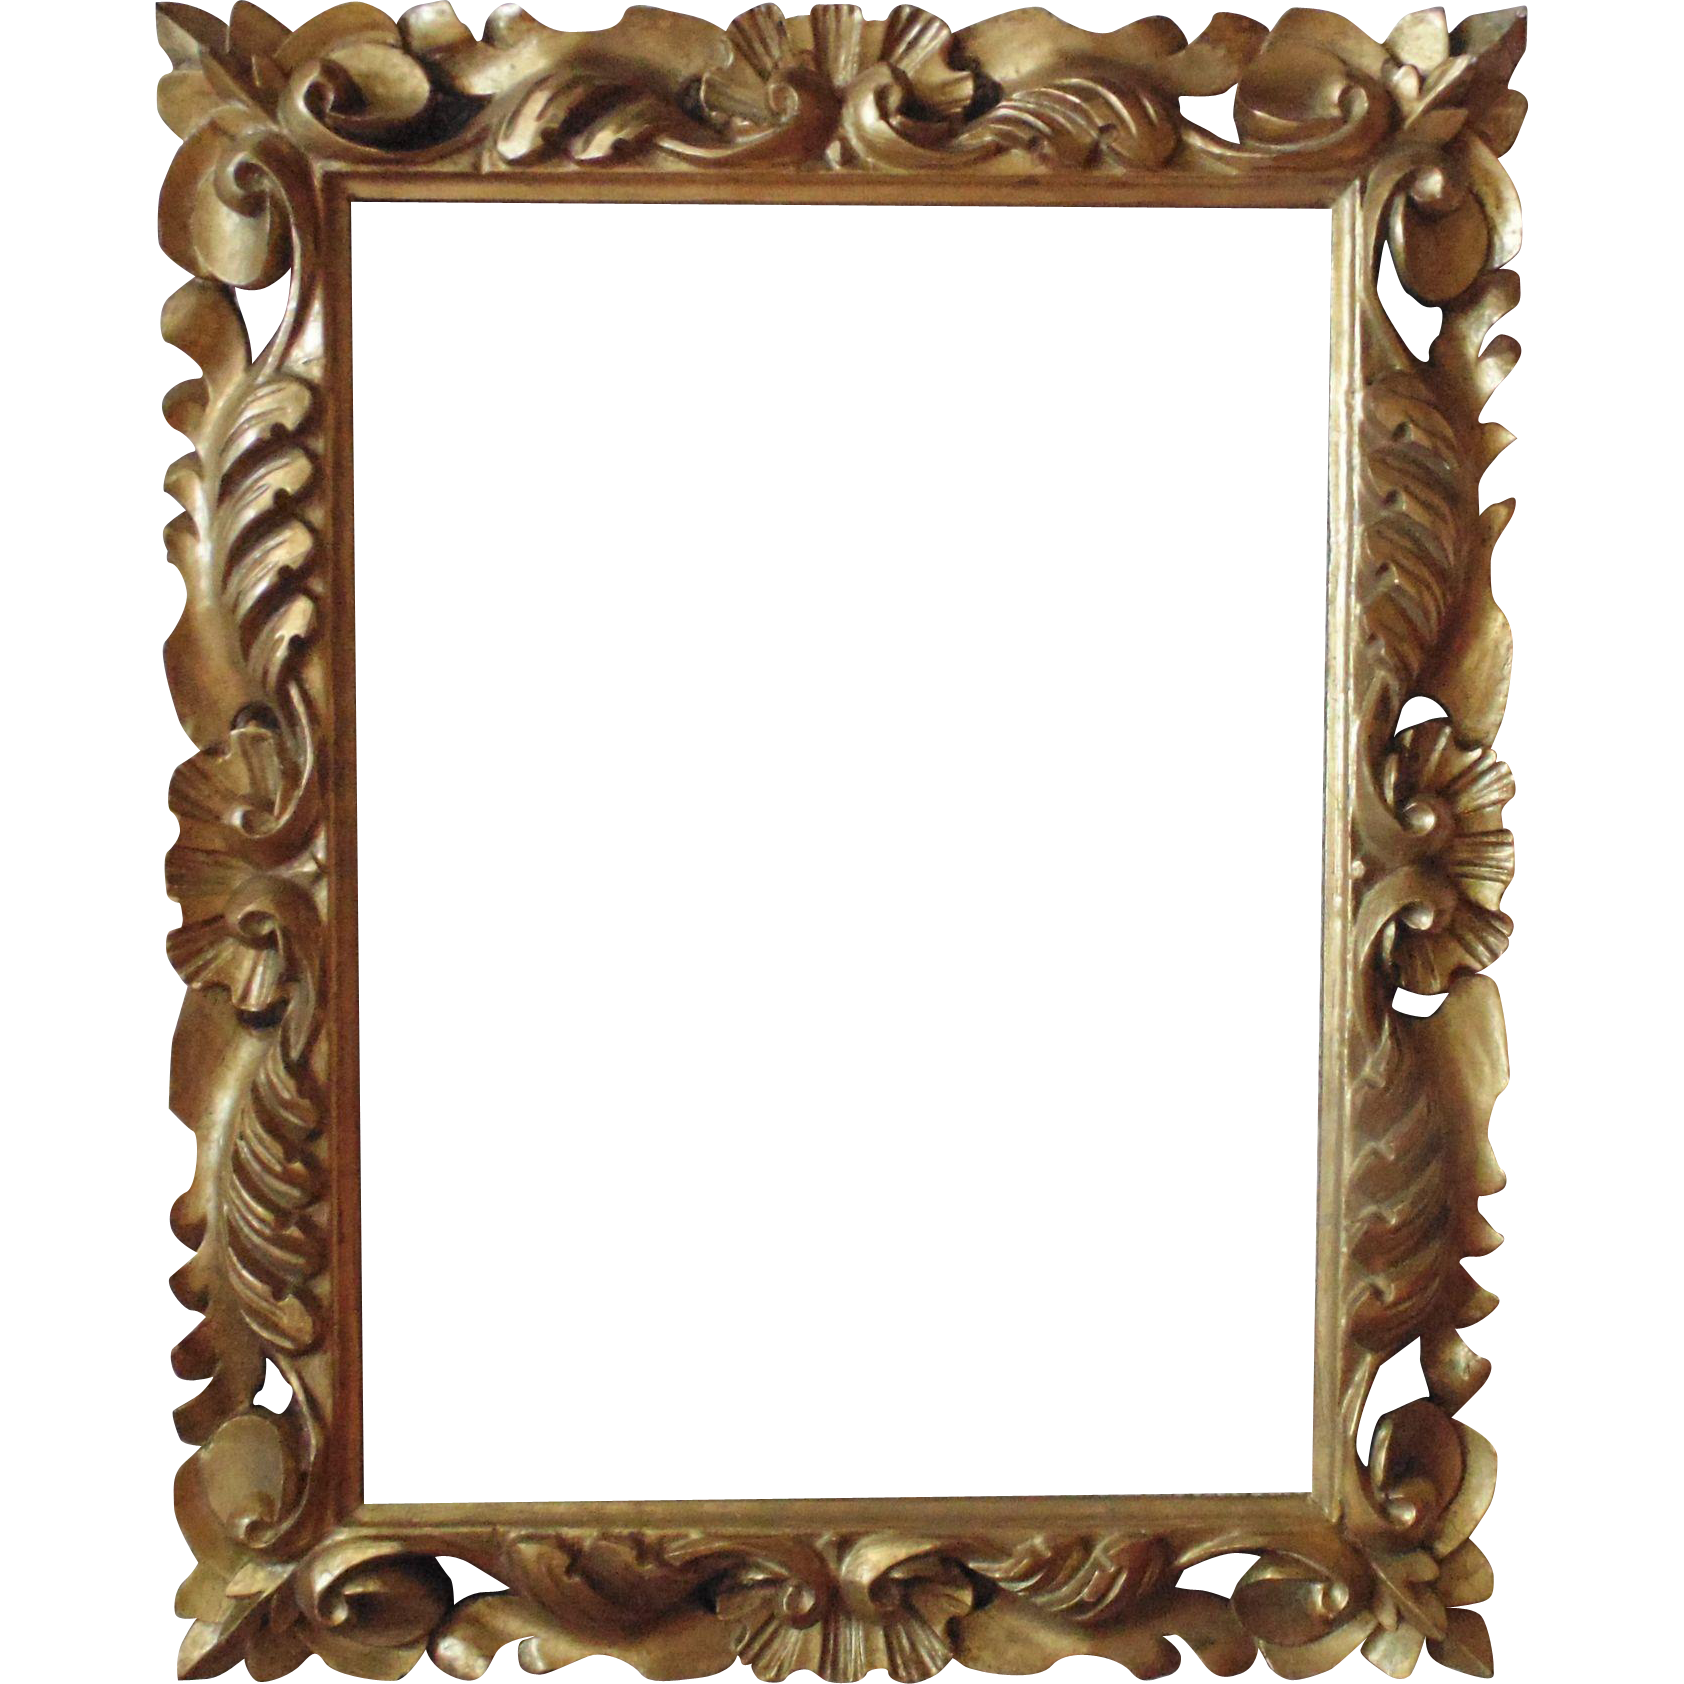 Золотое зеркало рамки PNG картина